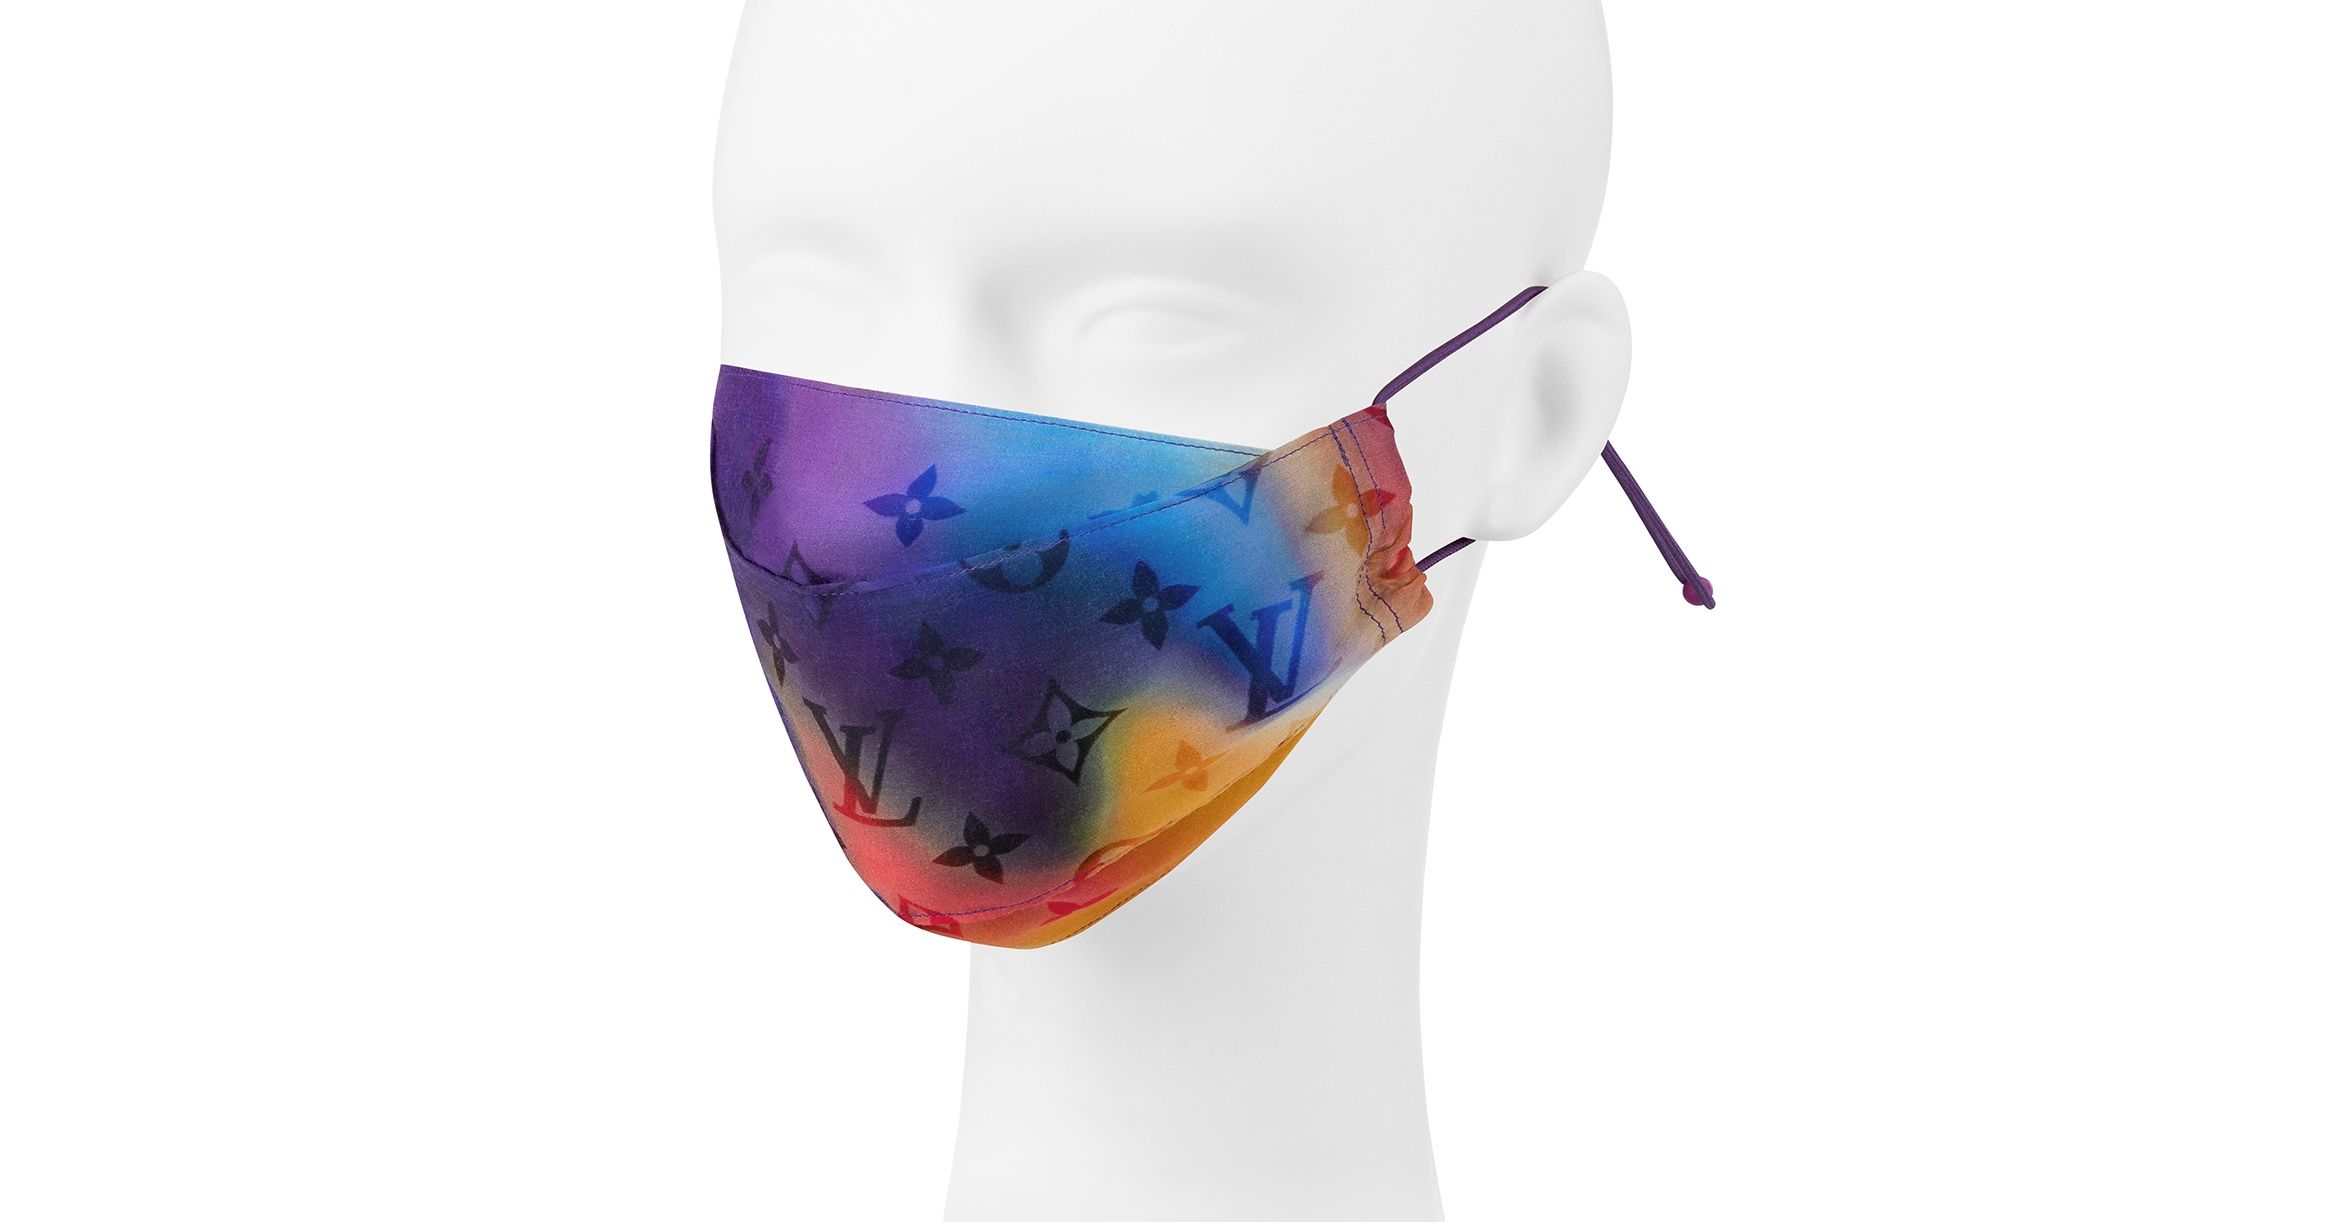 Louis Vuitton just dropped a tie-dye face mask designed by Virgil Abloh